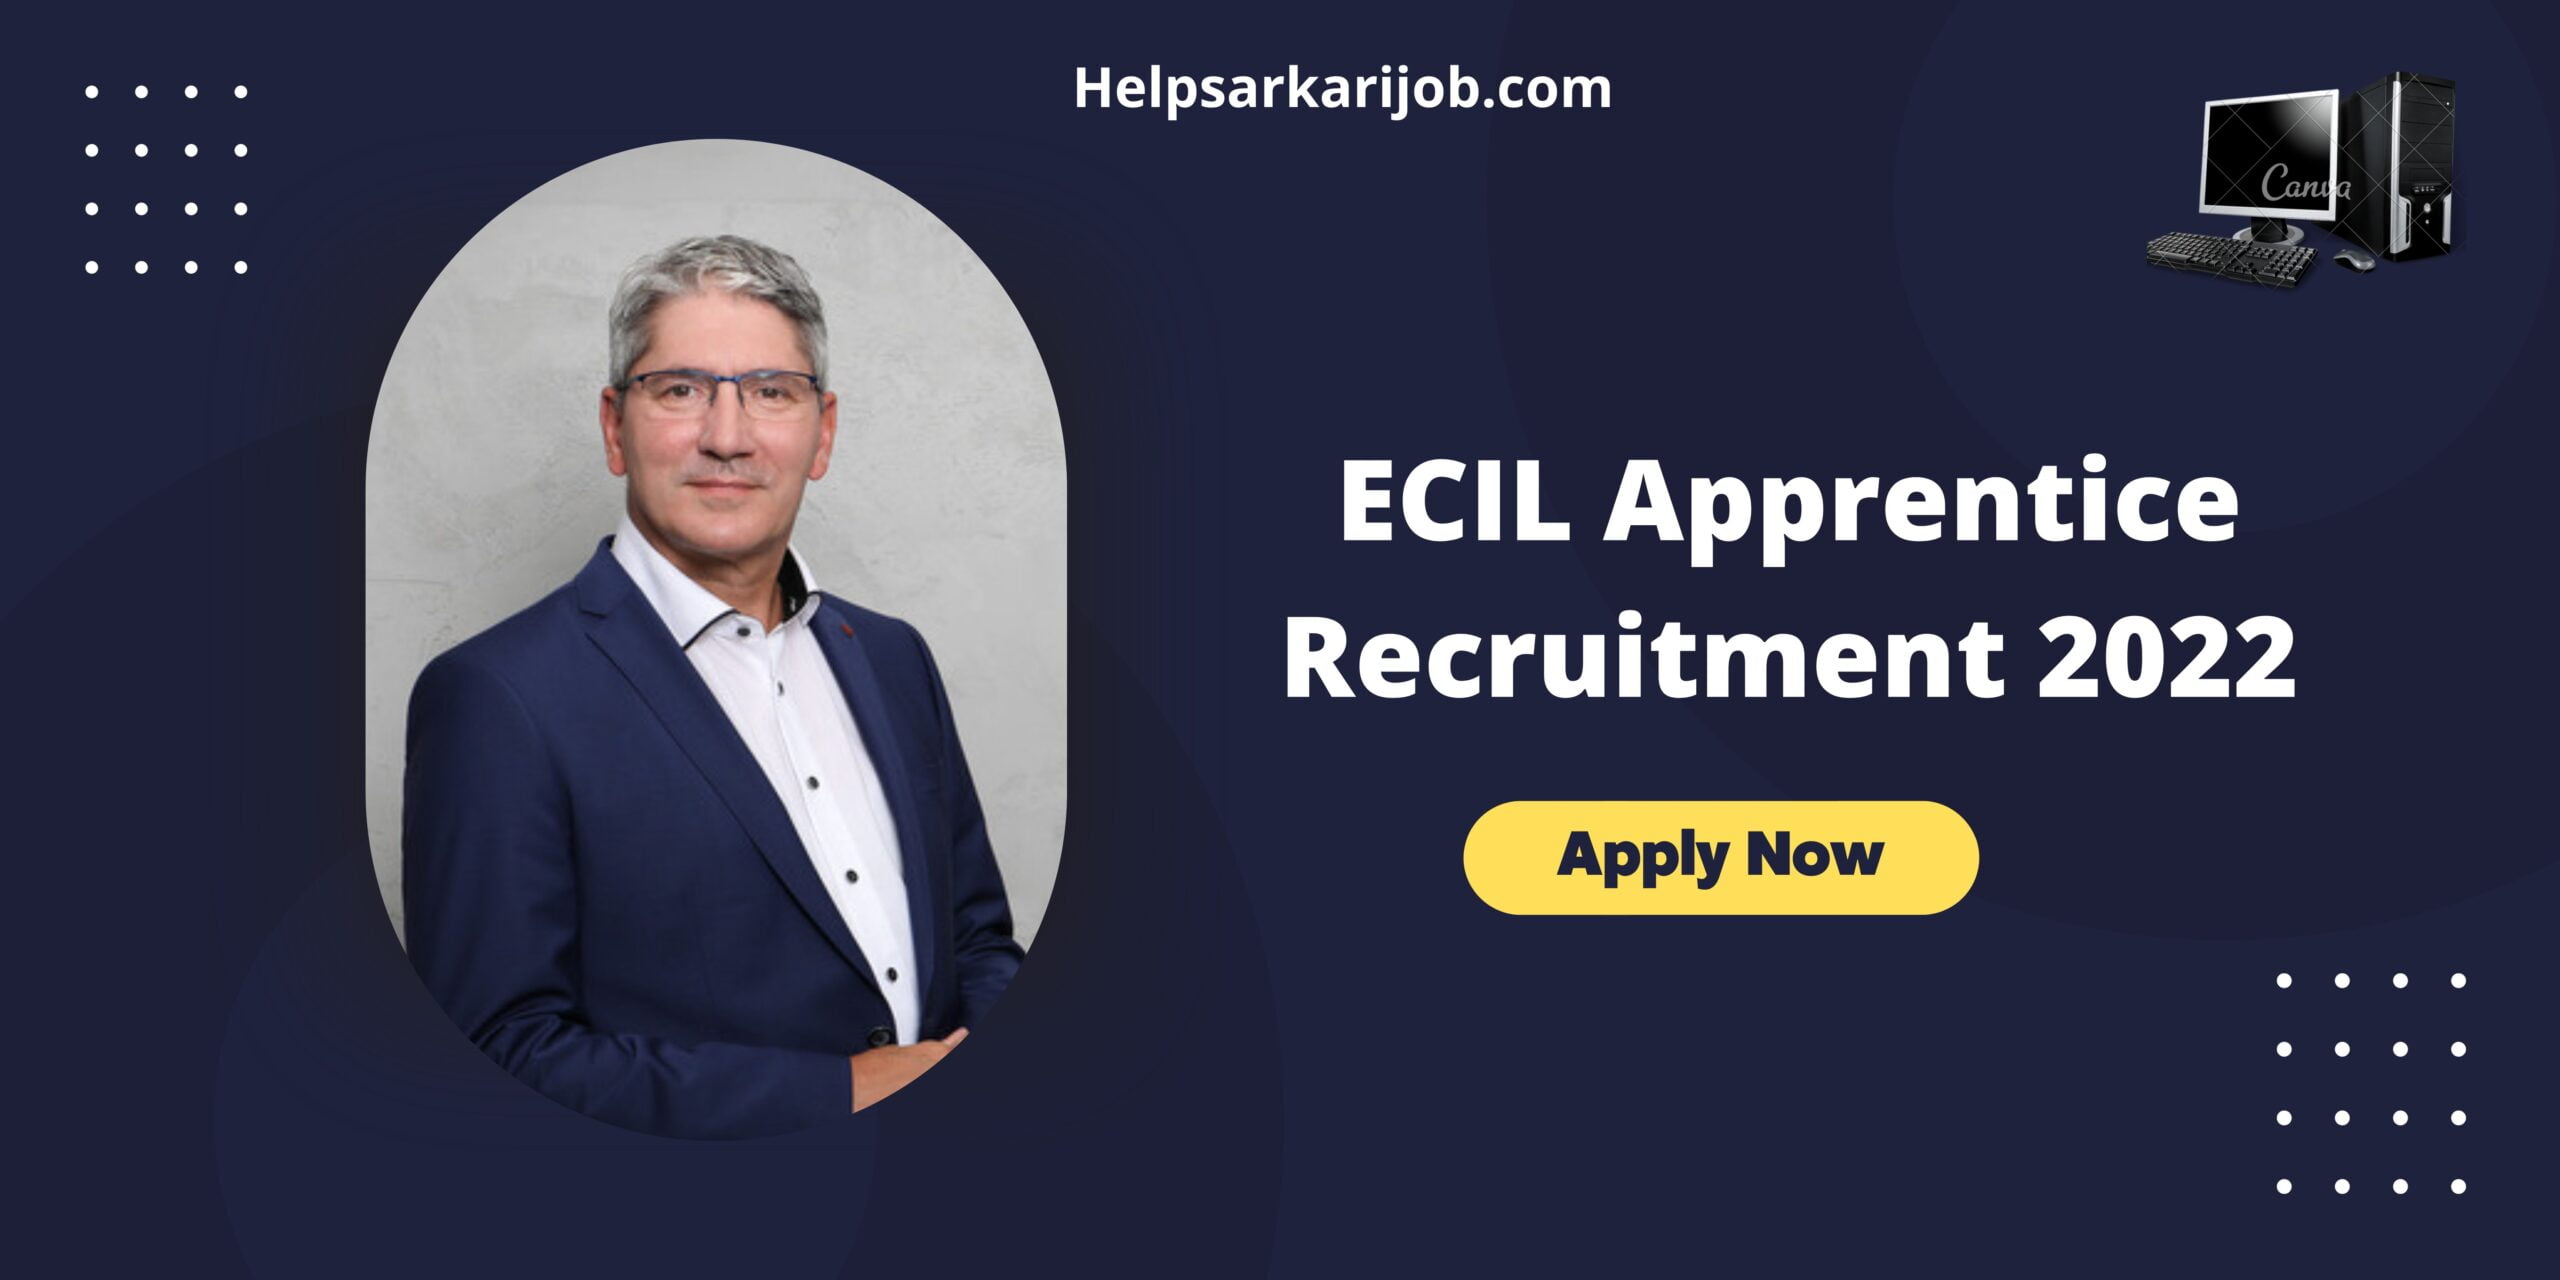 ECIL Apprentice Recruitment 2022